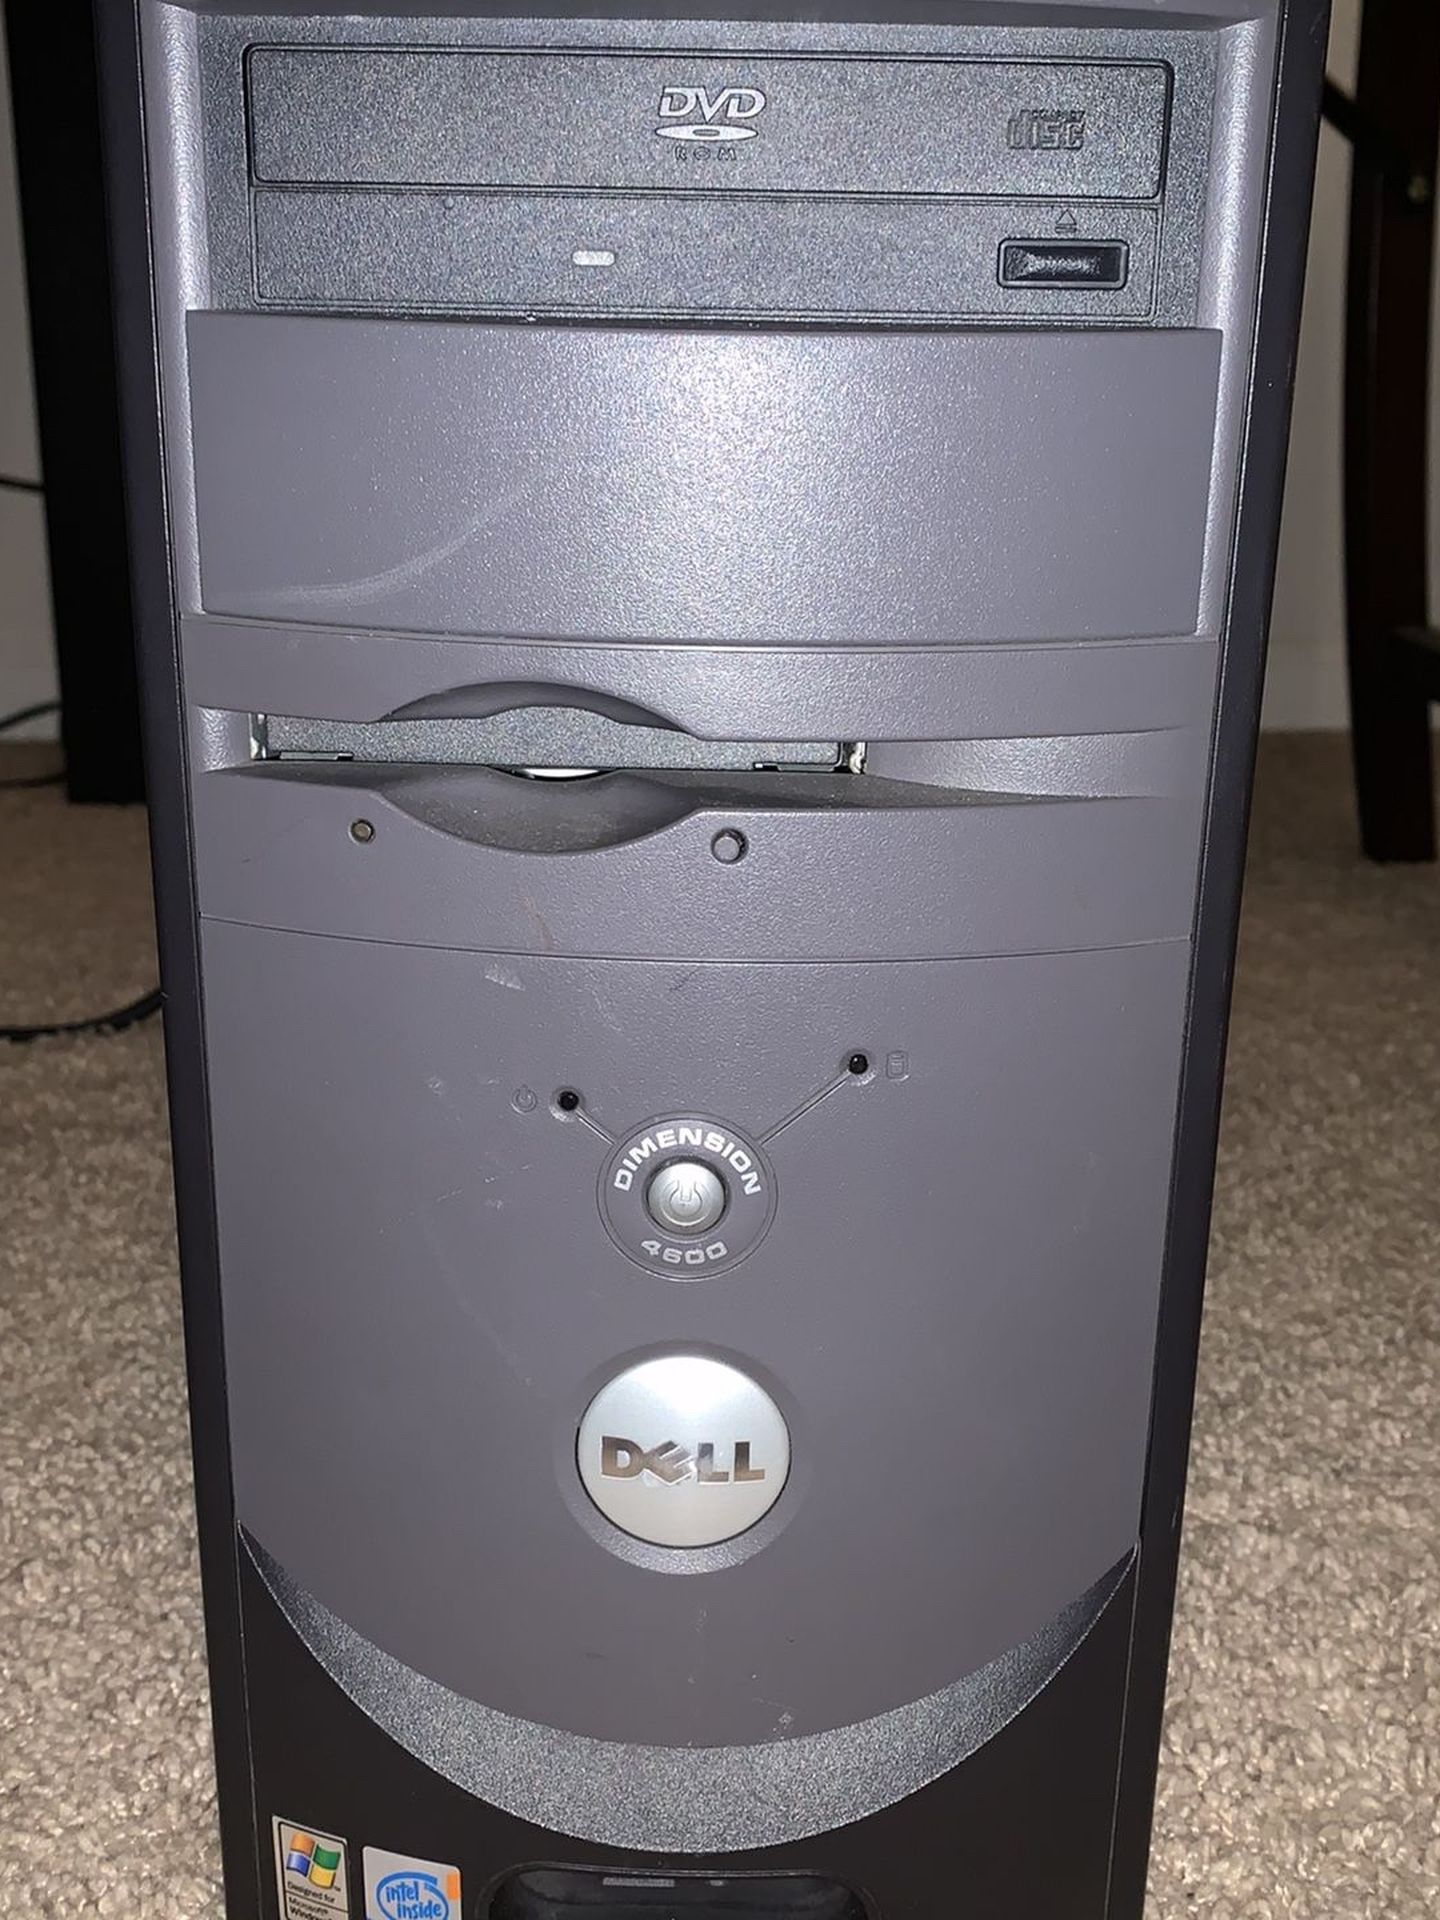 Dell Dimension DIM 4600 PC Pentium 4 - Windows XP Black Desktop Tower